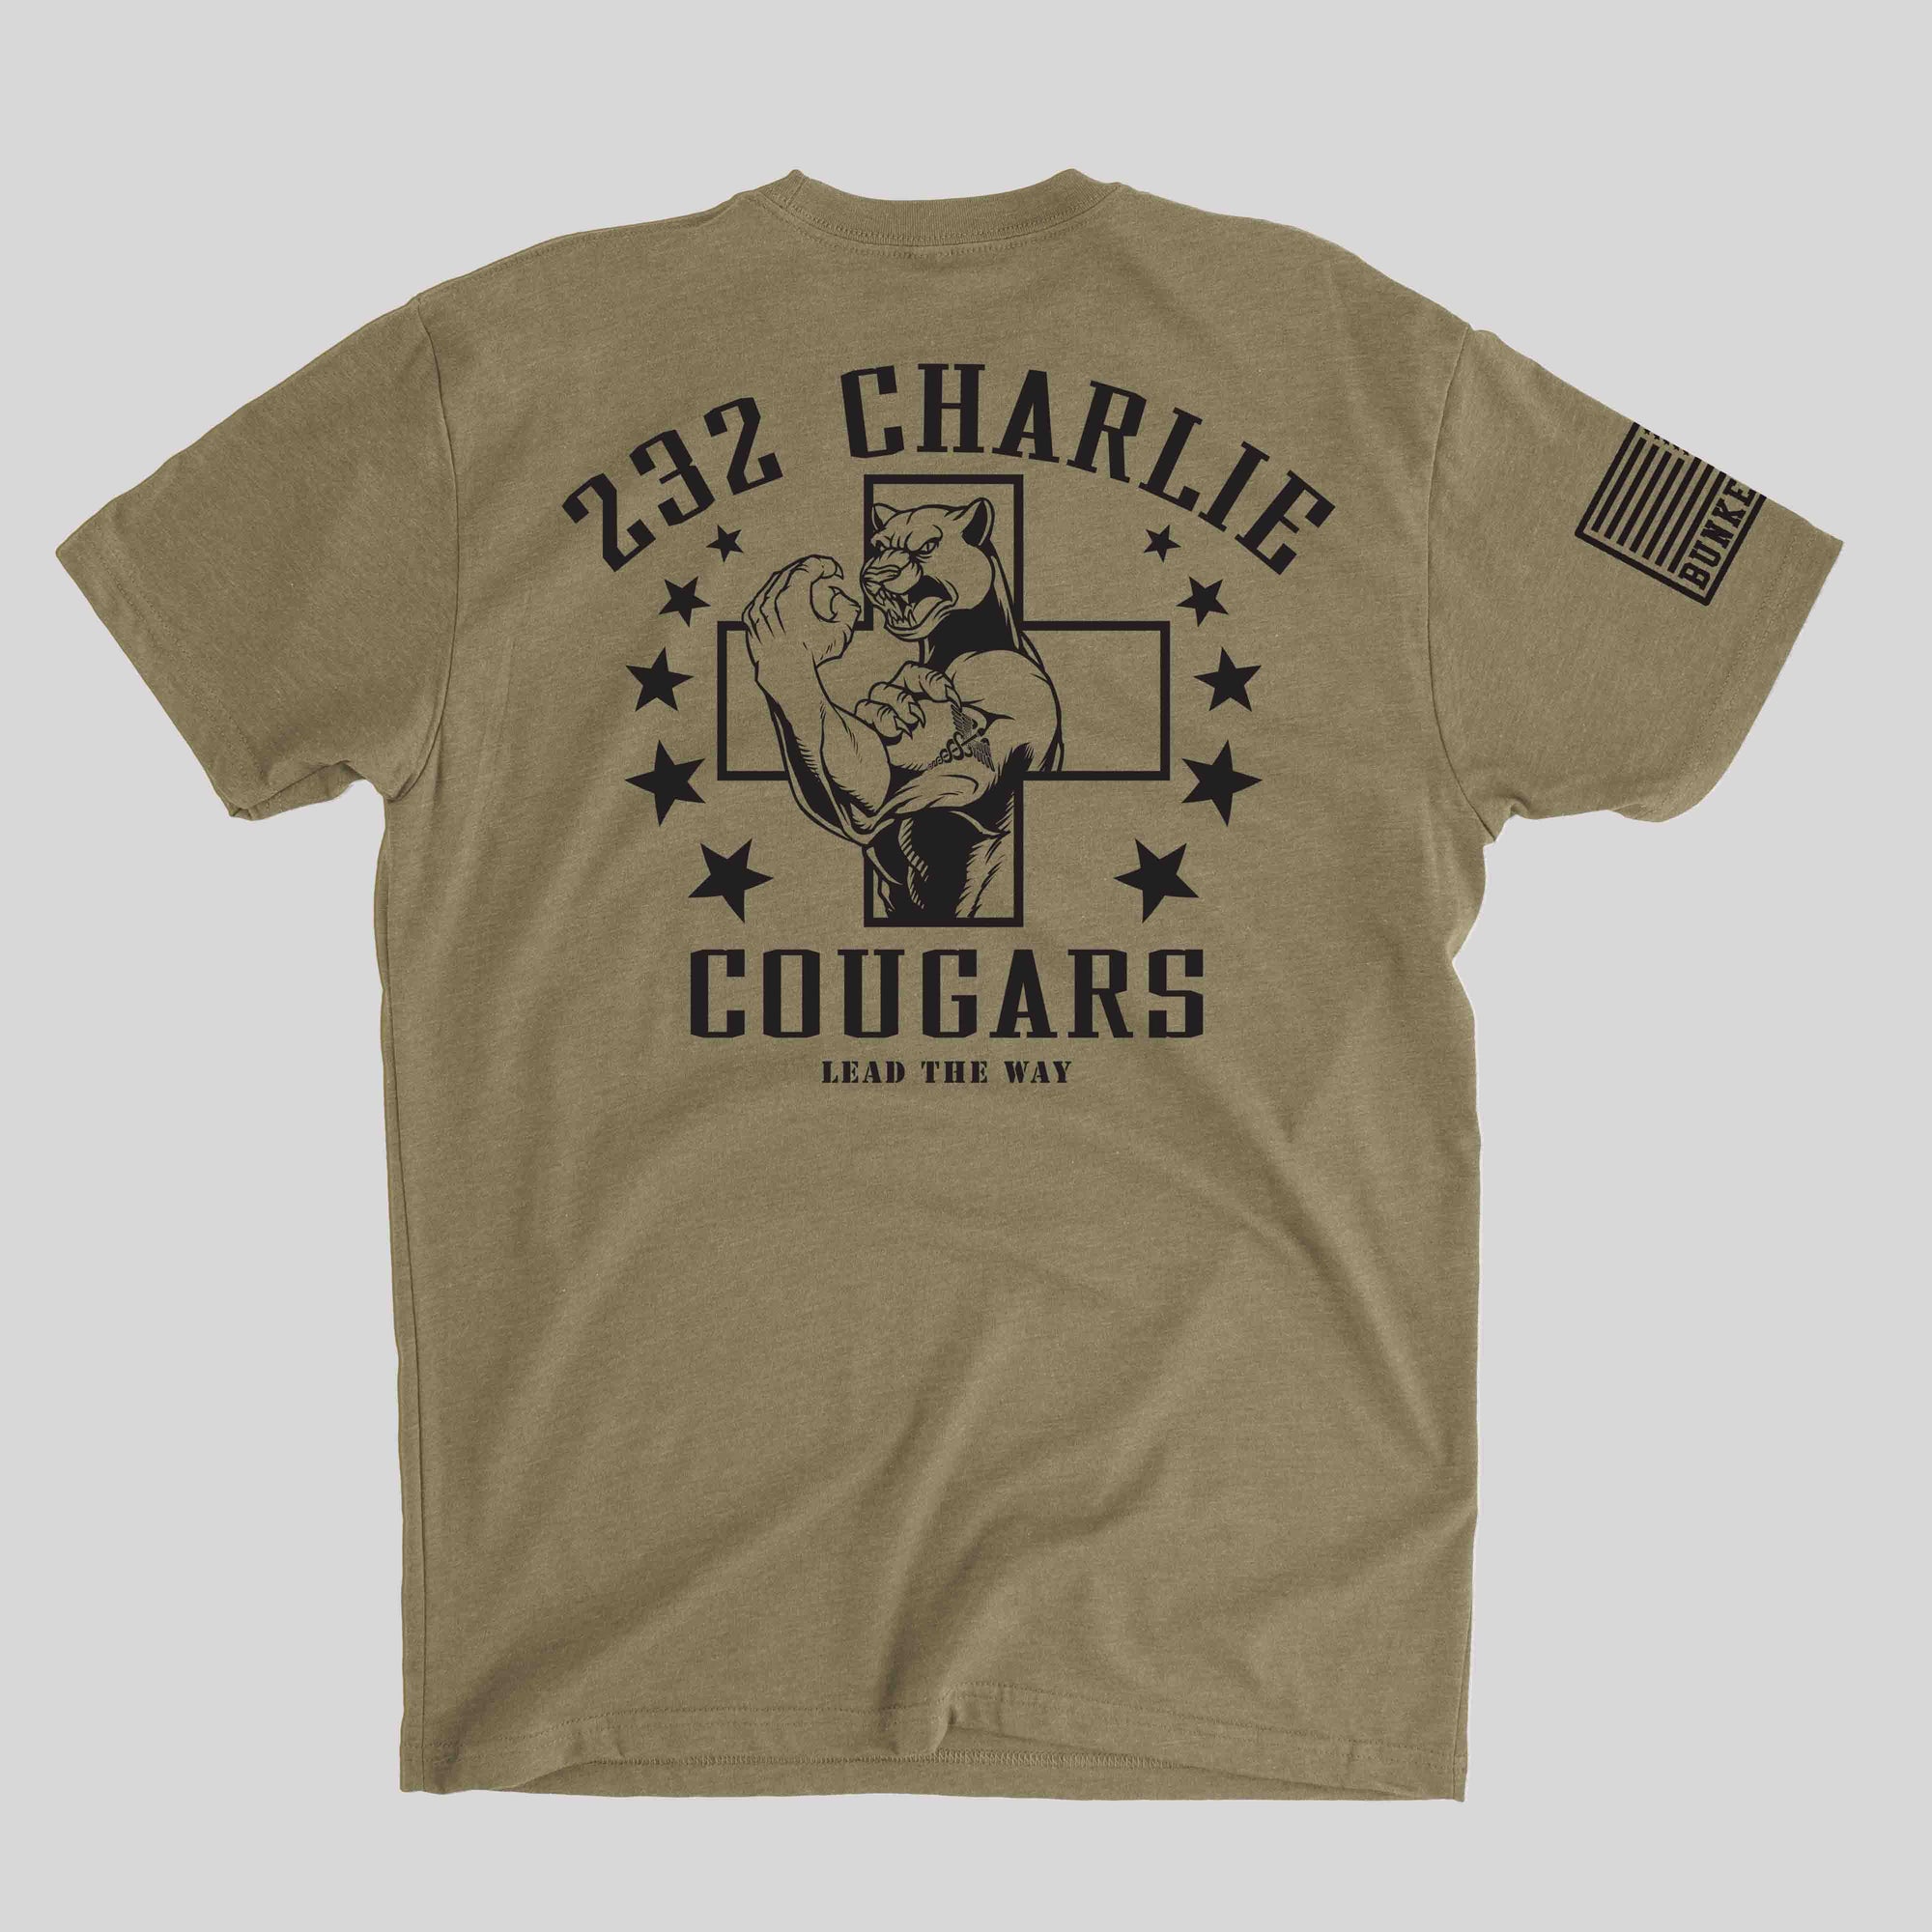 232 Charlie Company - Cougars